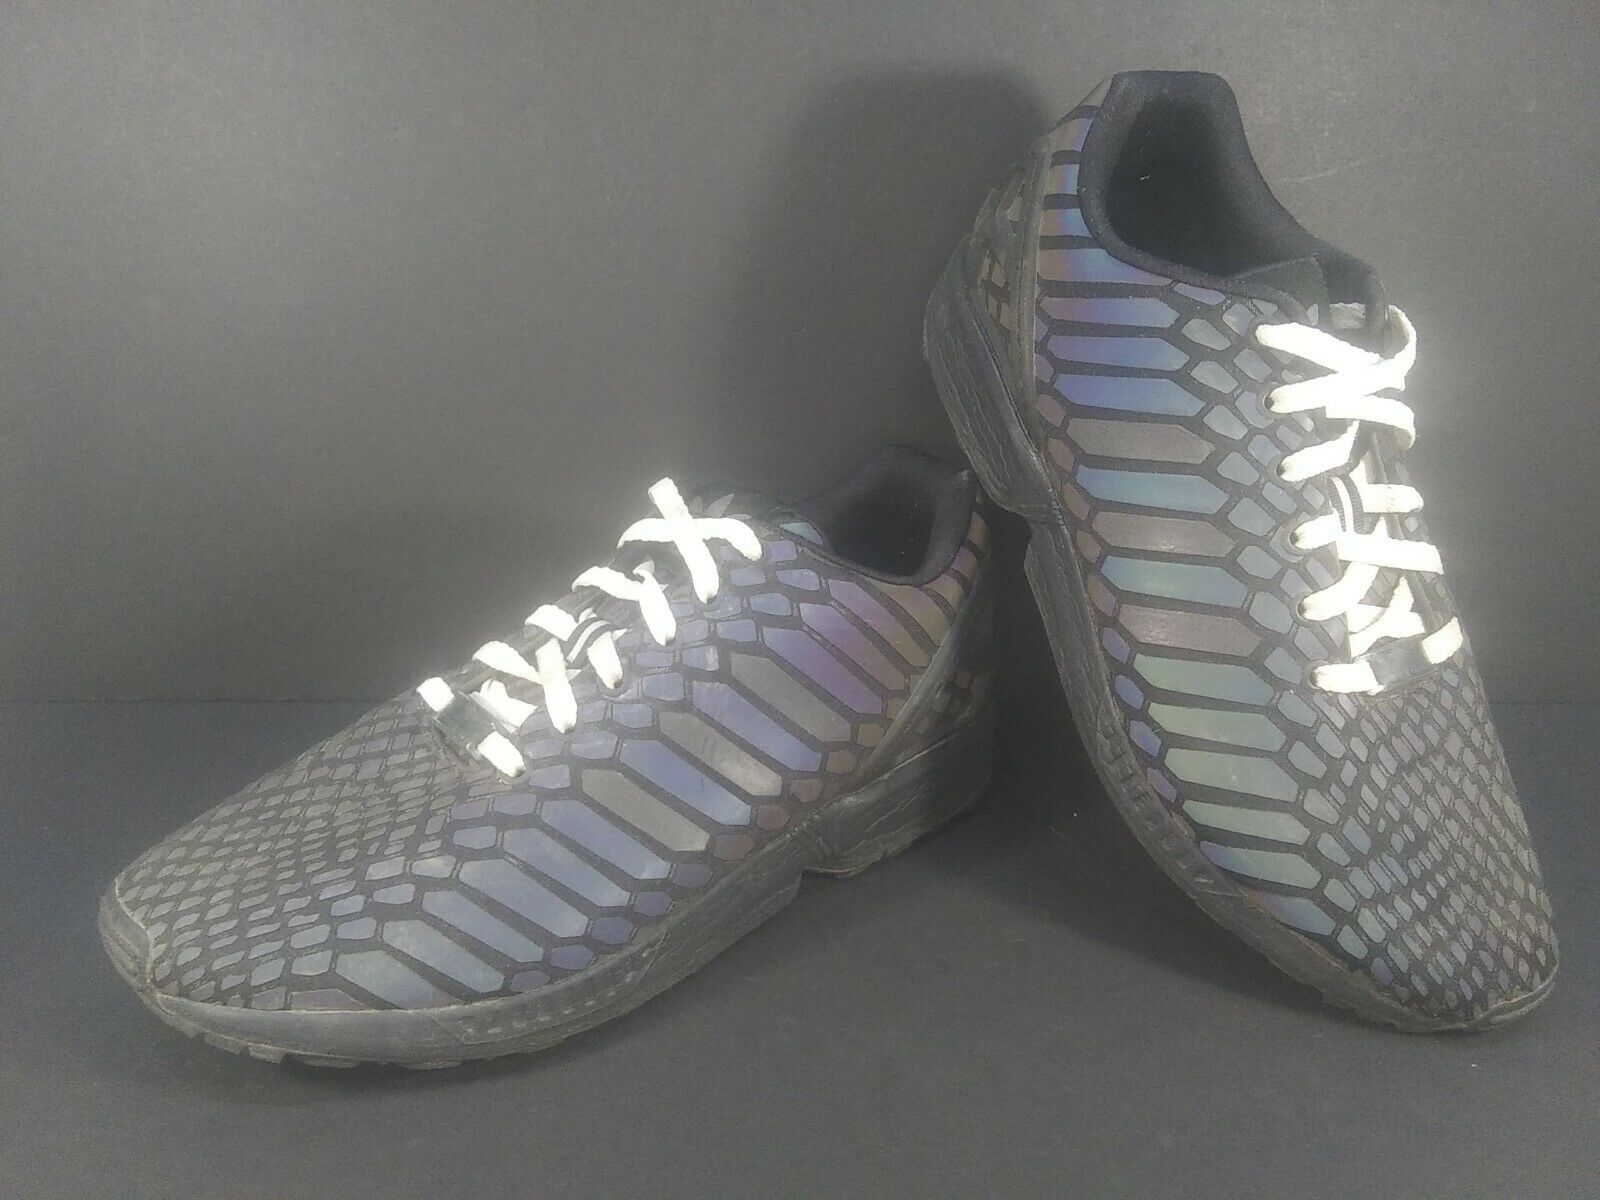 Adidas ZX Flux 'Xeno' Reflective Iridescent Men's Size 10.5 Running Shoes AQ7418